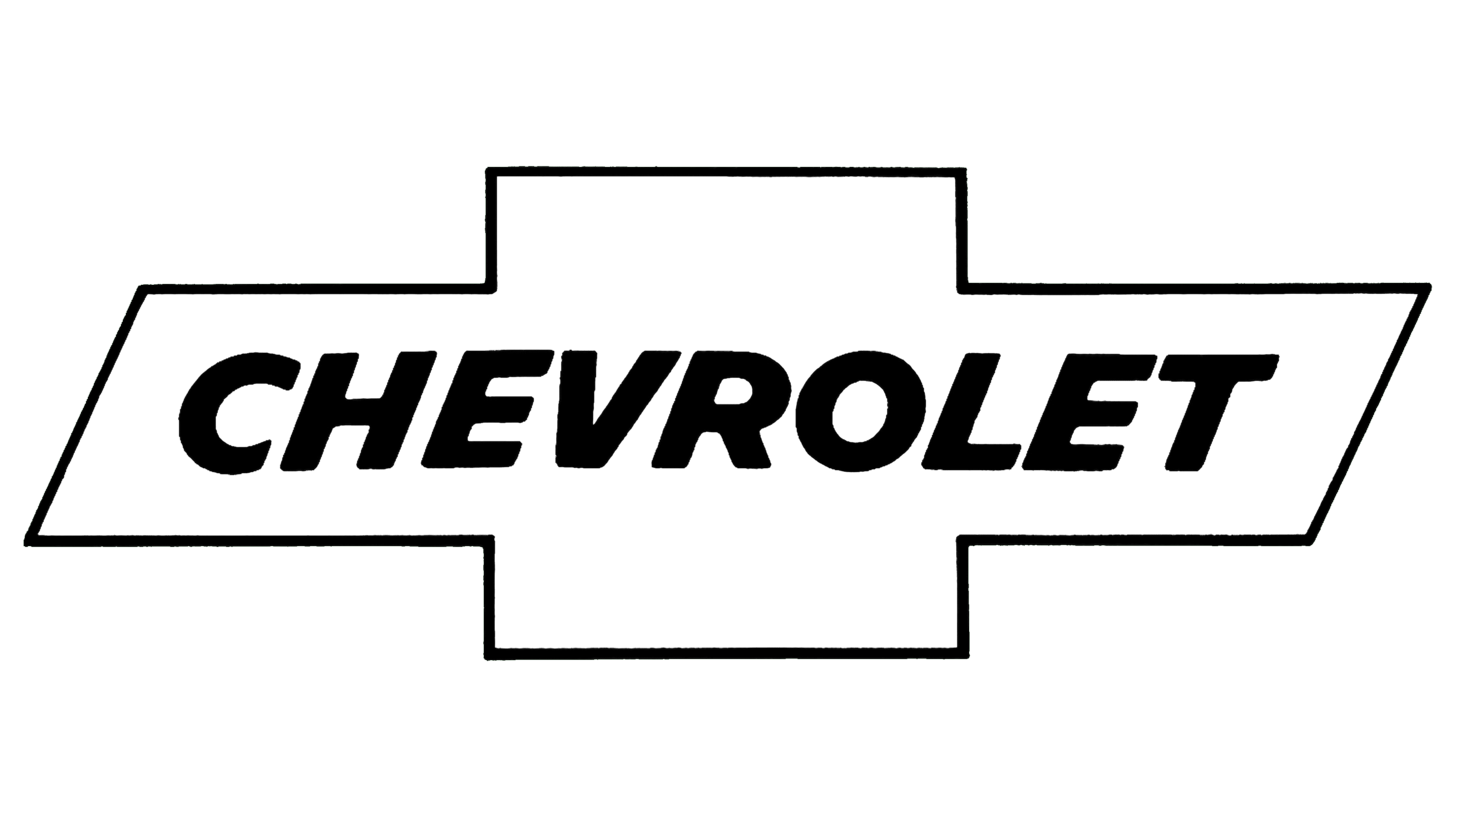 Chevrolet sign 1964 1976